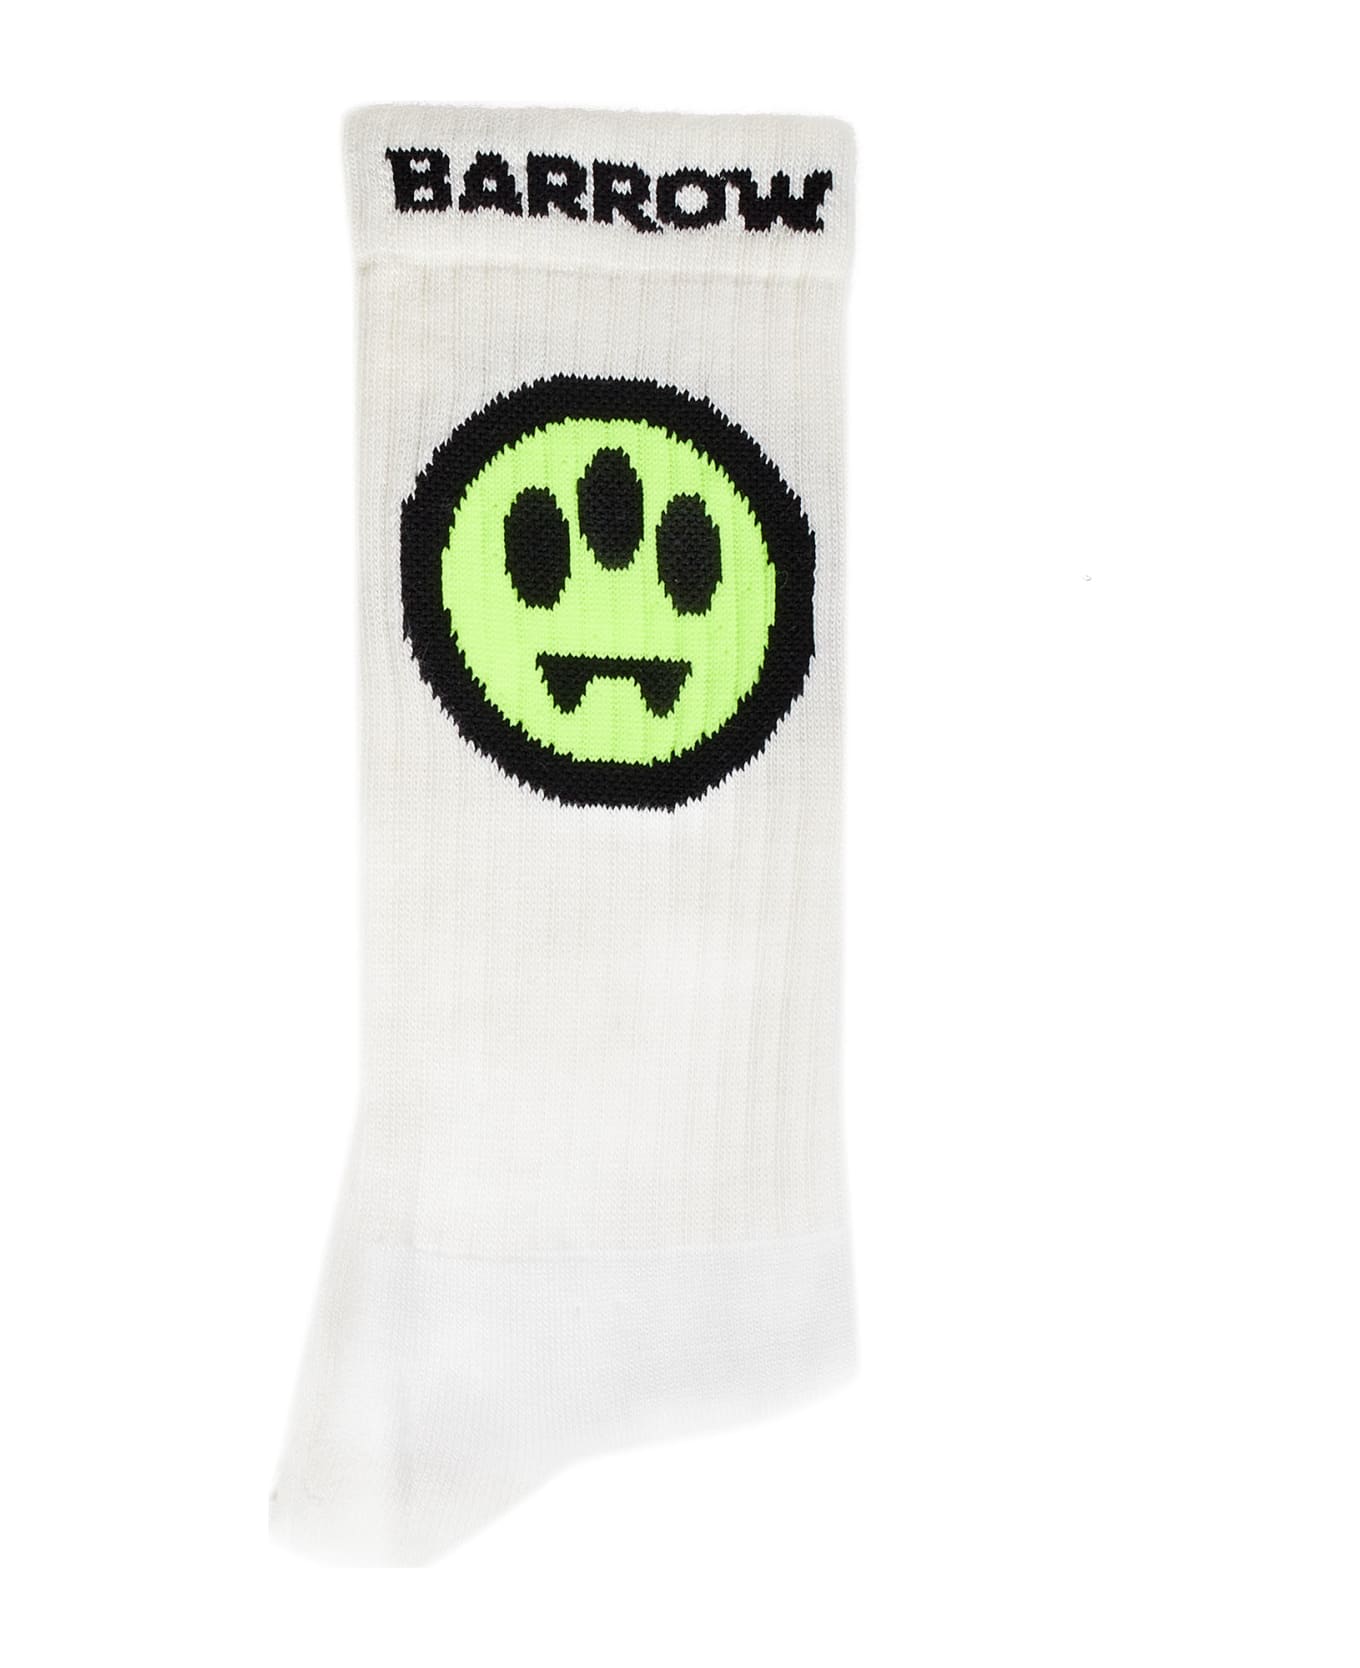 Barrow Socks - White